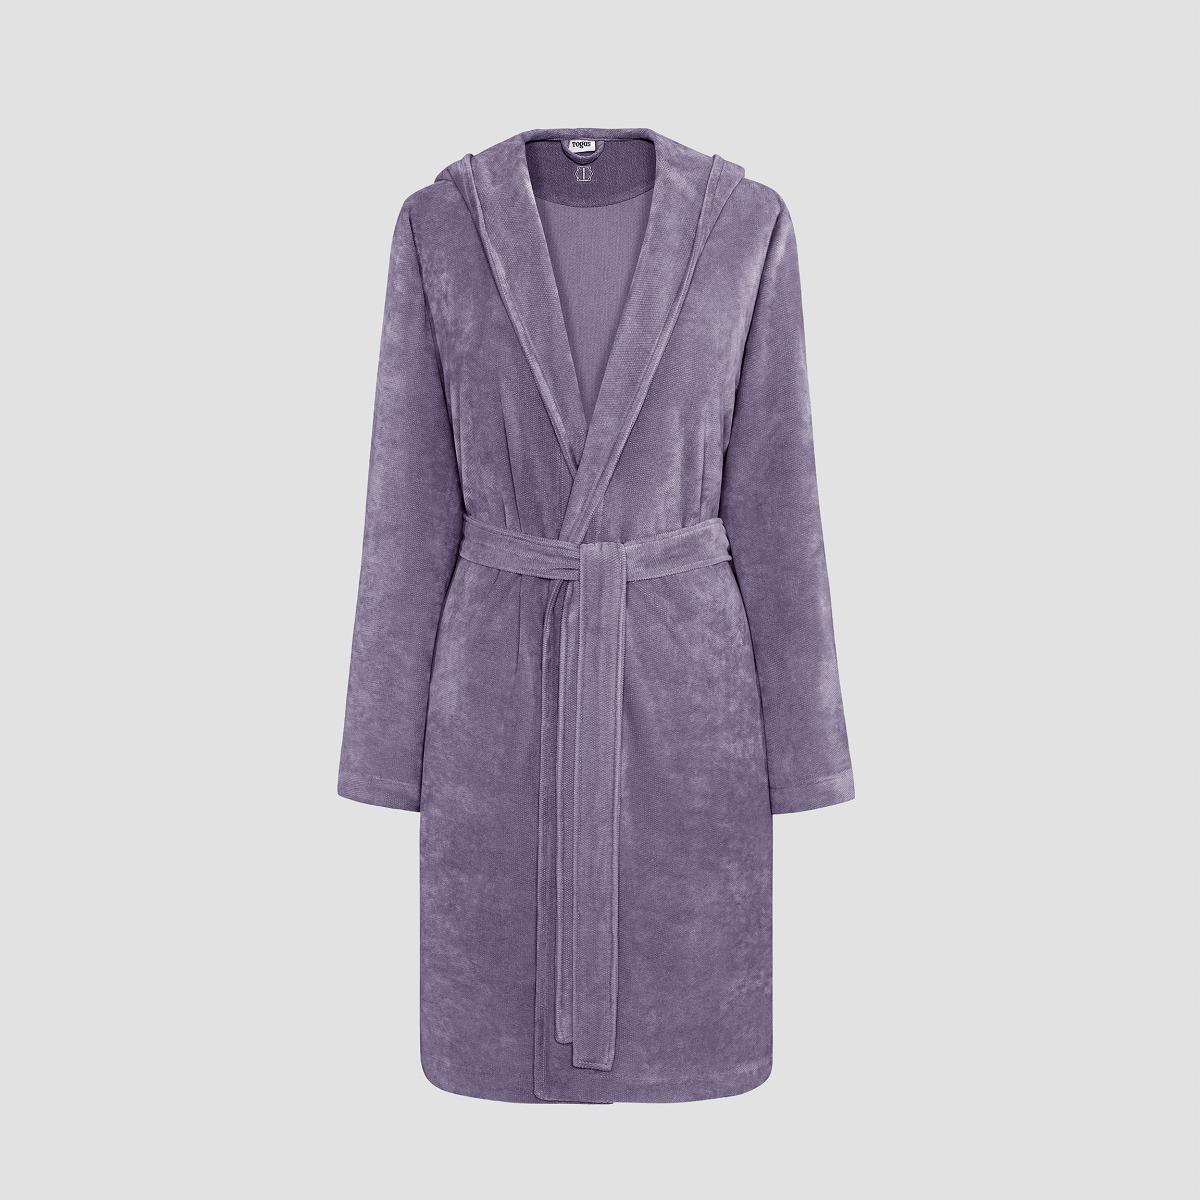 Халат Togas Талия фиолетовый XL(50) жен халат сабрина фиолетовый р 54